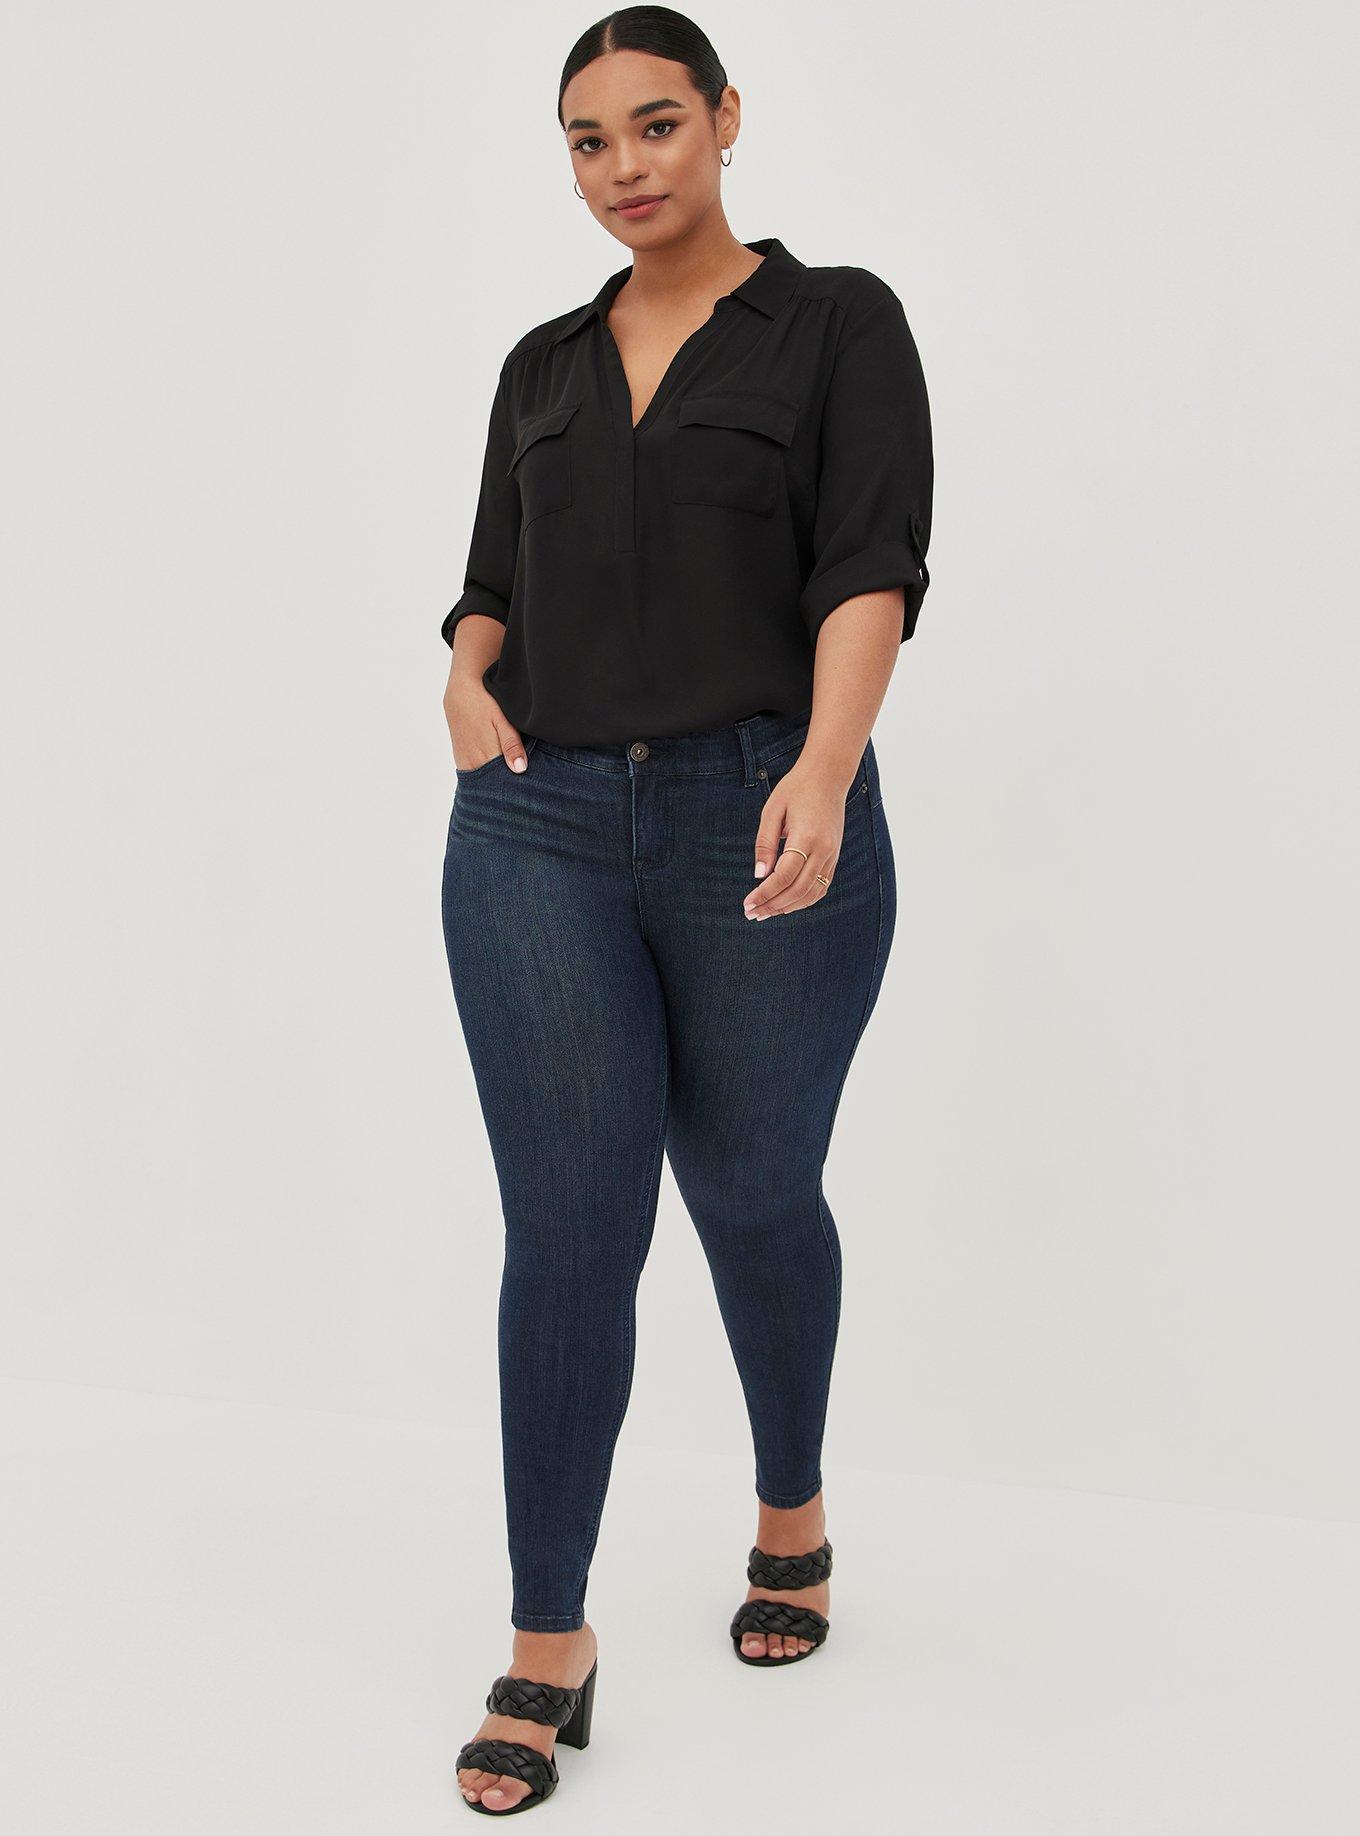 New Women's Plus Size Black Grey Print Sharktail Hem Top-Blouse Size 1X 2X  4X